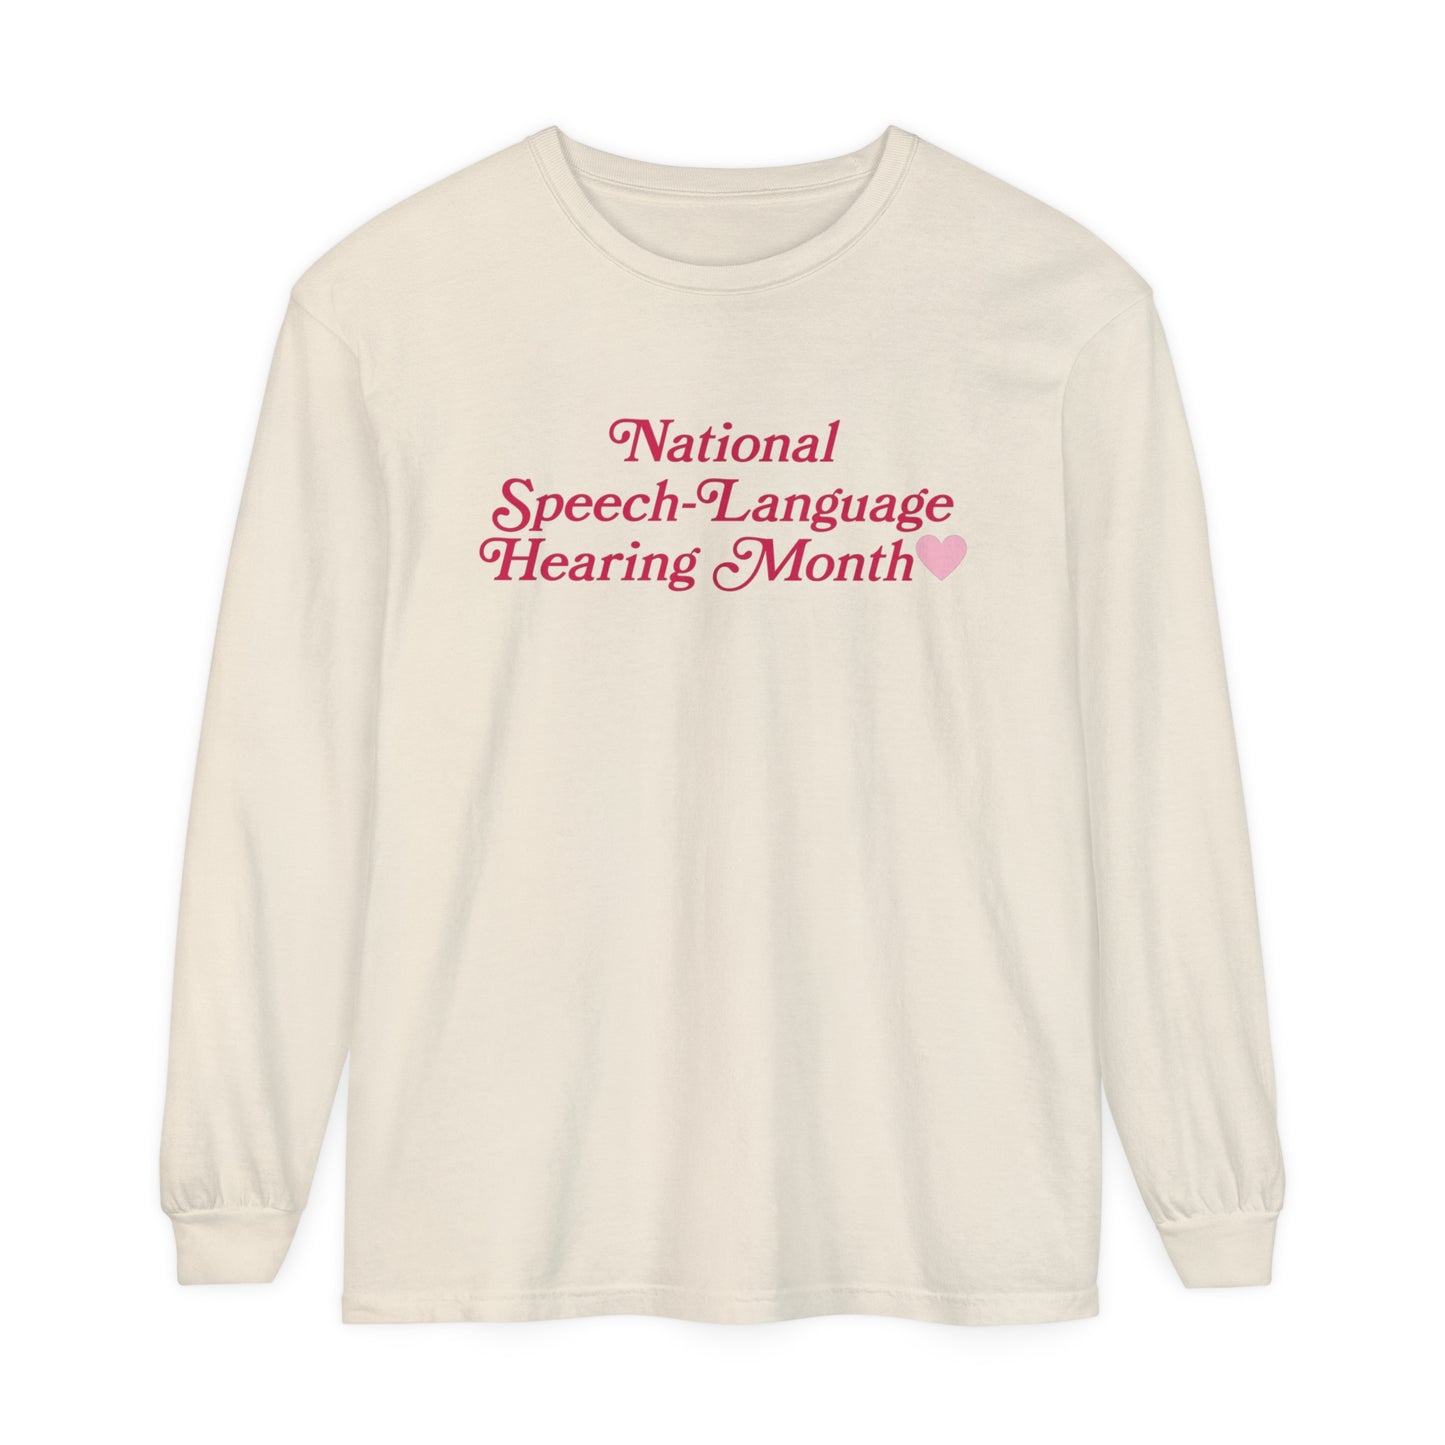 National Speech-Language-Hearing Month Long Sleeve Comfort Colors T-Shirt